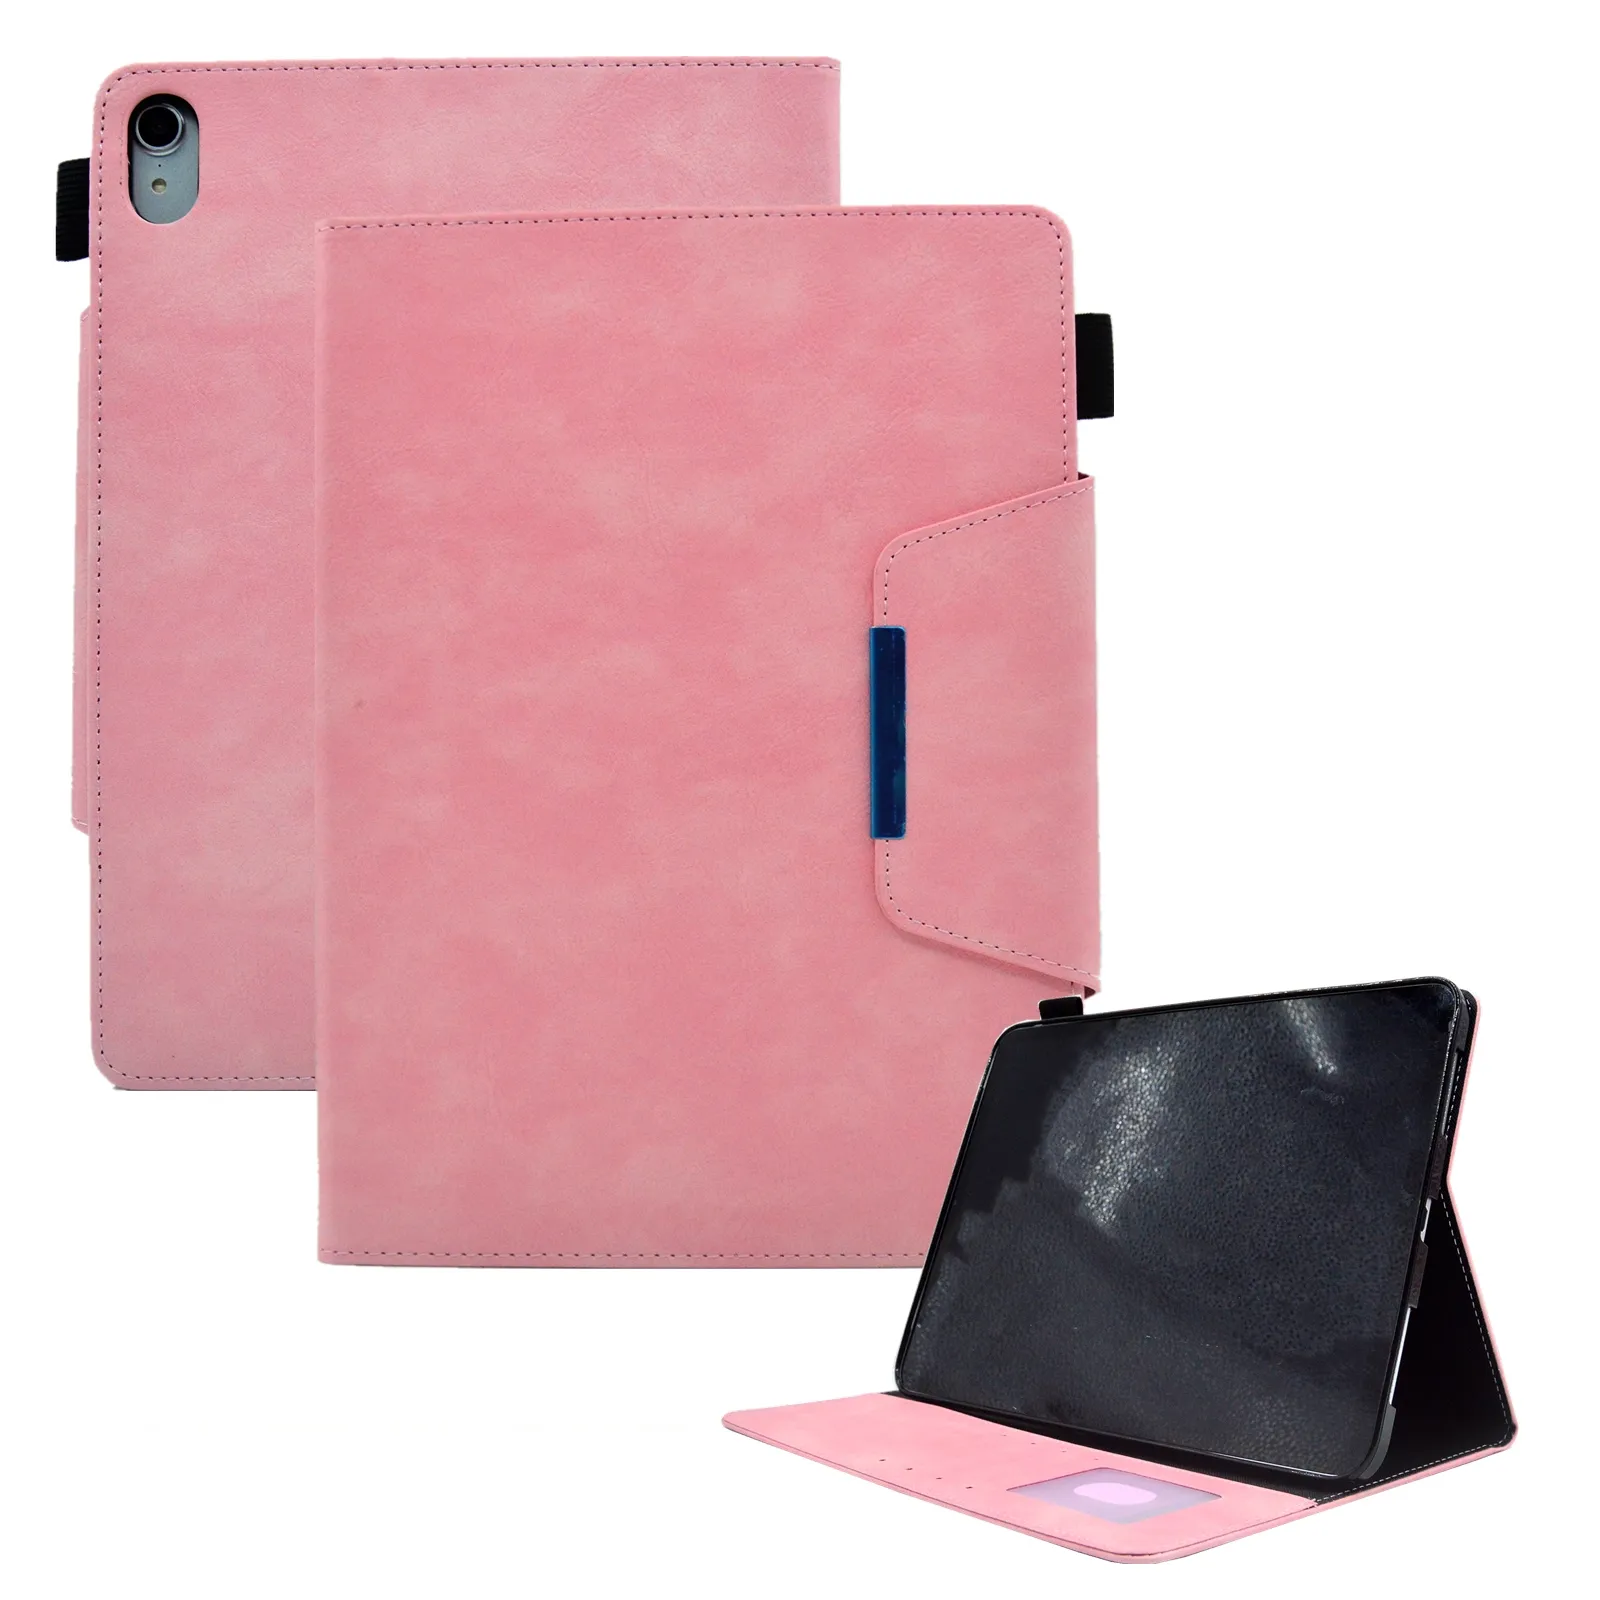 360 Rotation Shock proof Fashion Smart Schutzhülle für Ipad Mini 123456 Hülle Tablet Cover für Kinder